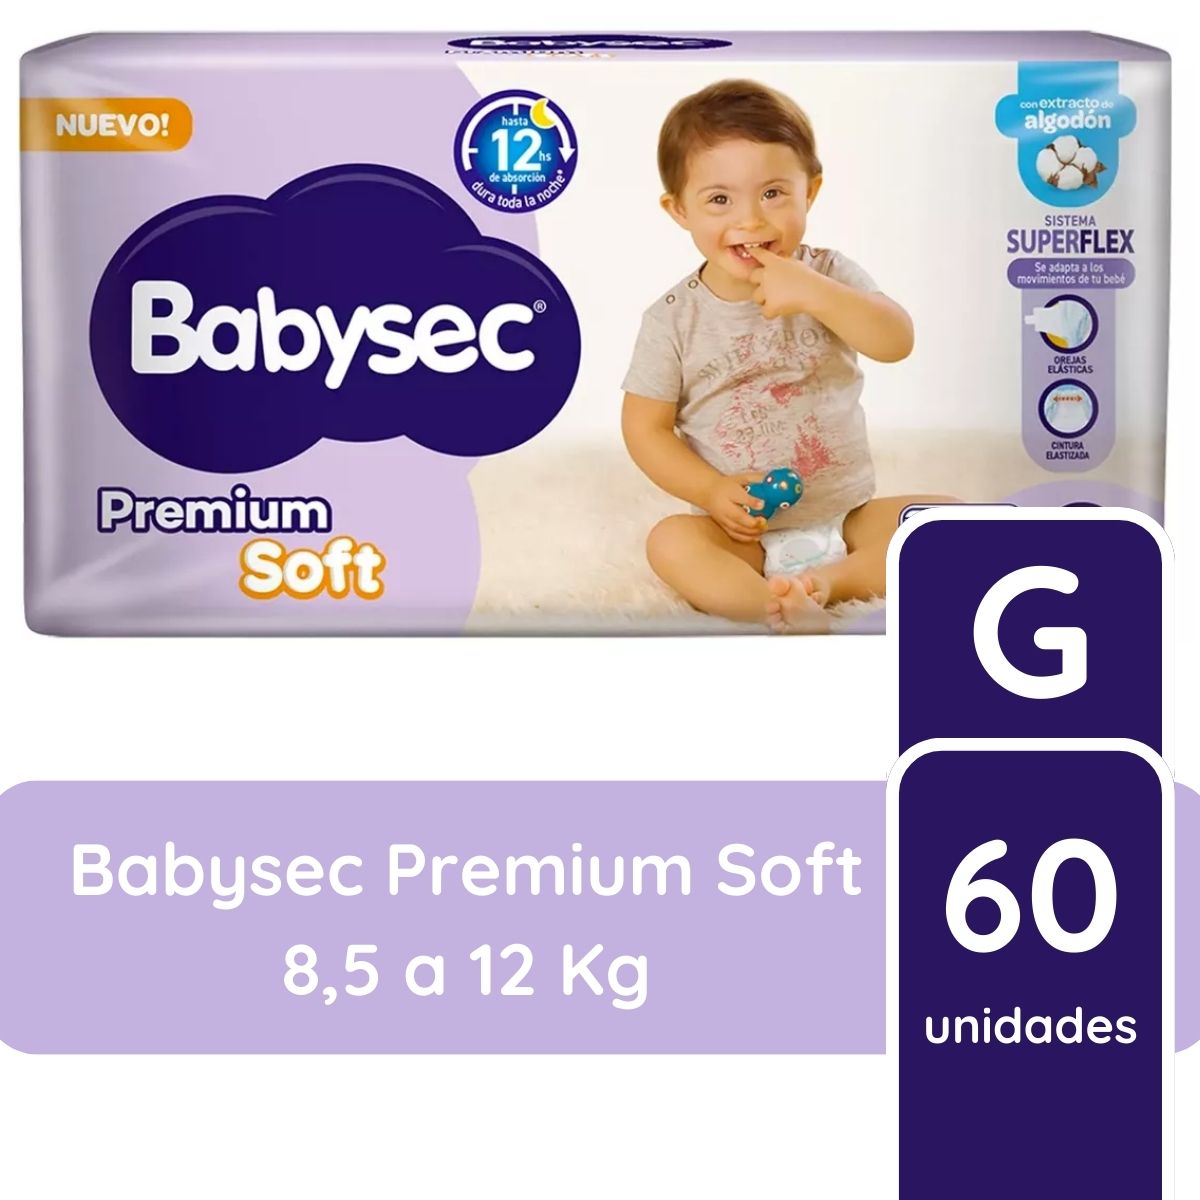 Imagen 1 de 2 de Pañales Babysec Premium Soft Mes Consumo G x60 unidades